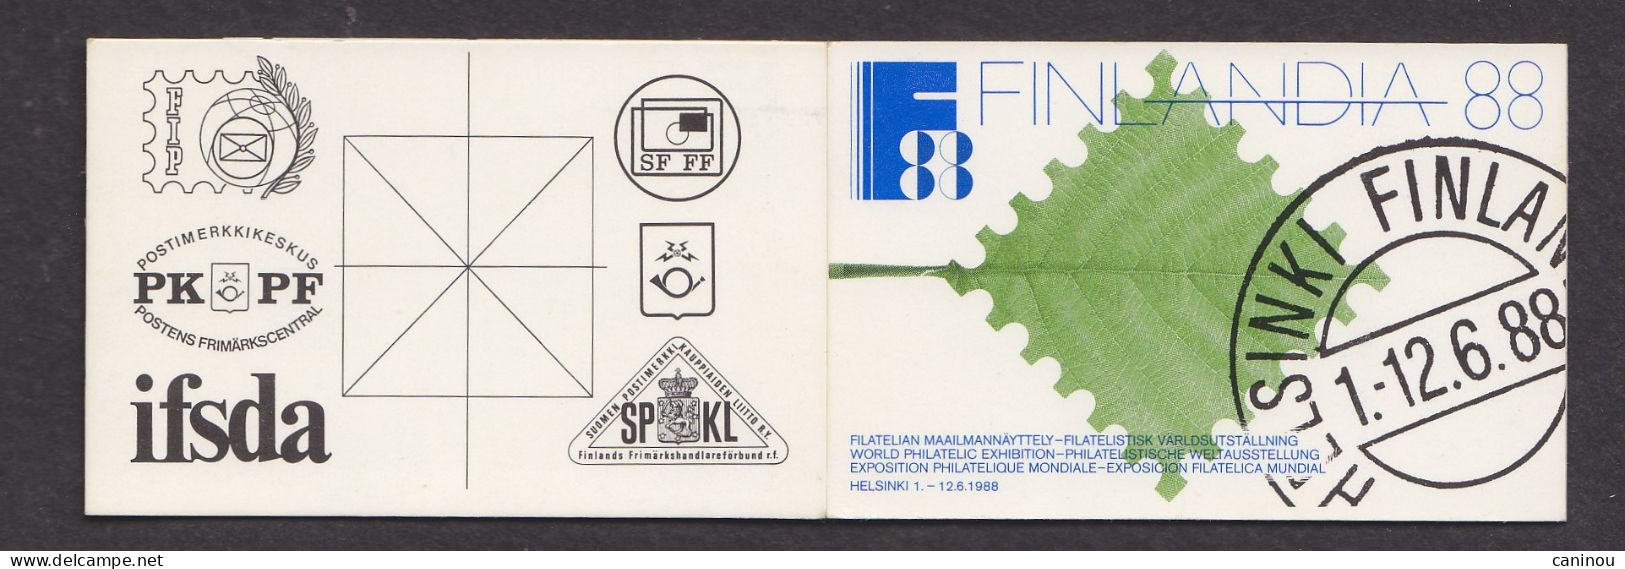 FINLANDE CARNET  Y & T C972a  FINLANDIA 88 1987 NEUF - Booklets